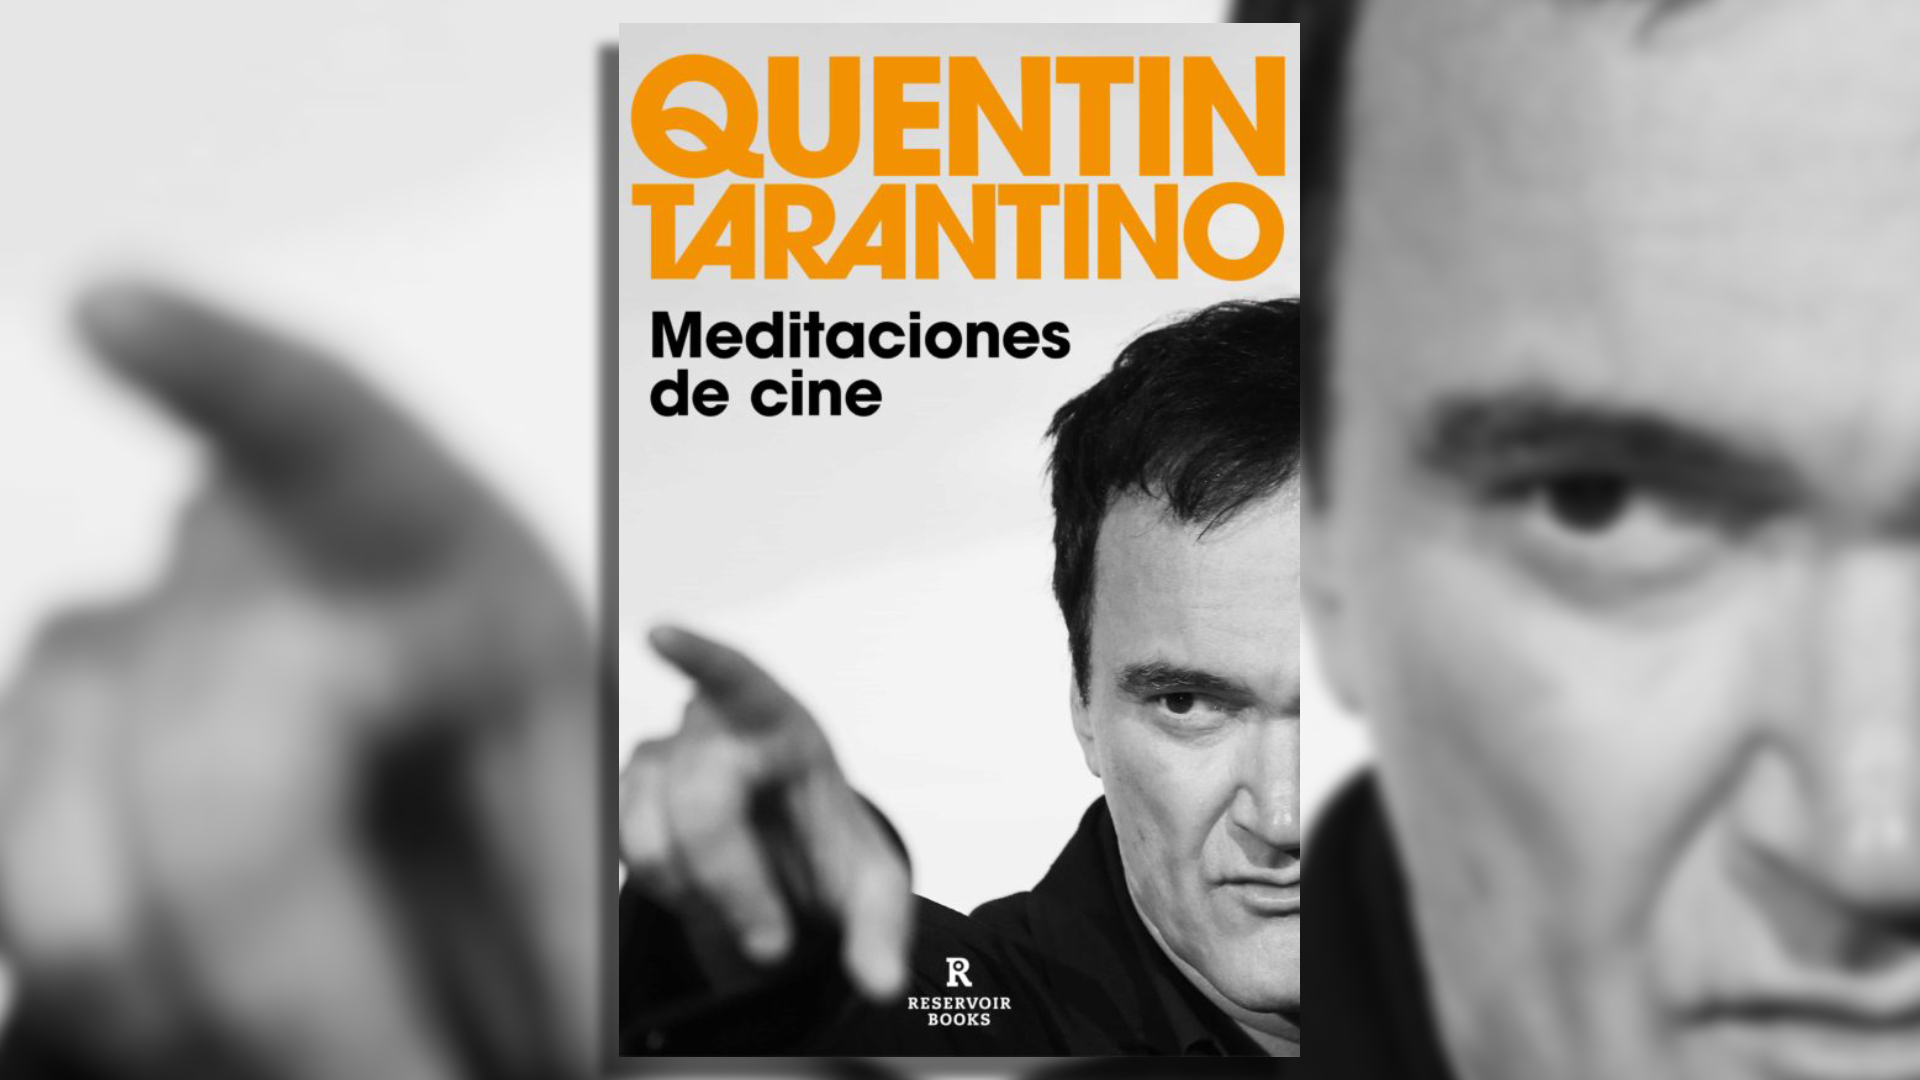 "cinema meditations" by Quentin Tarantino